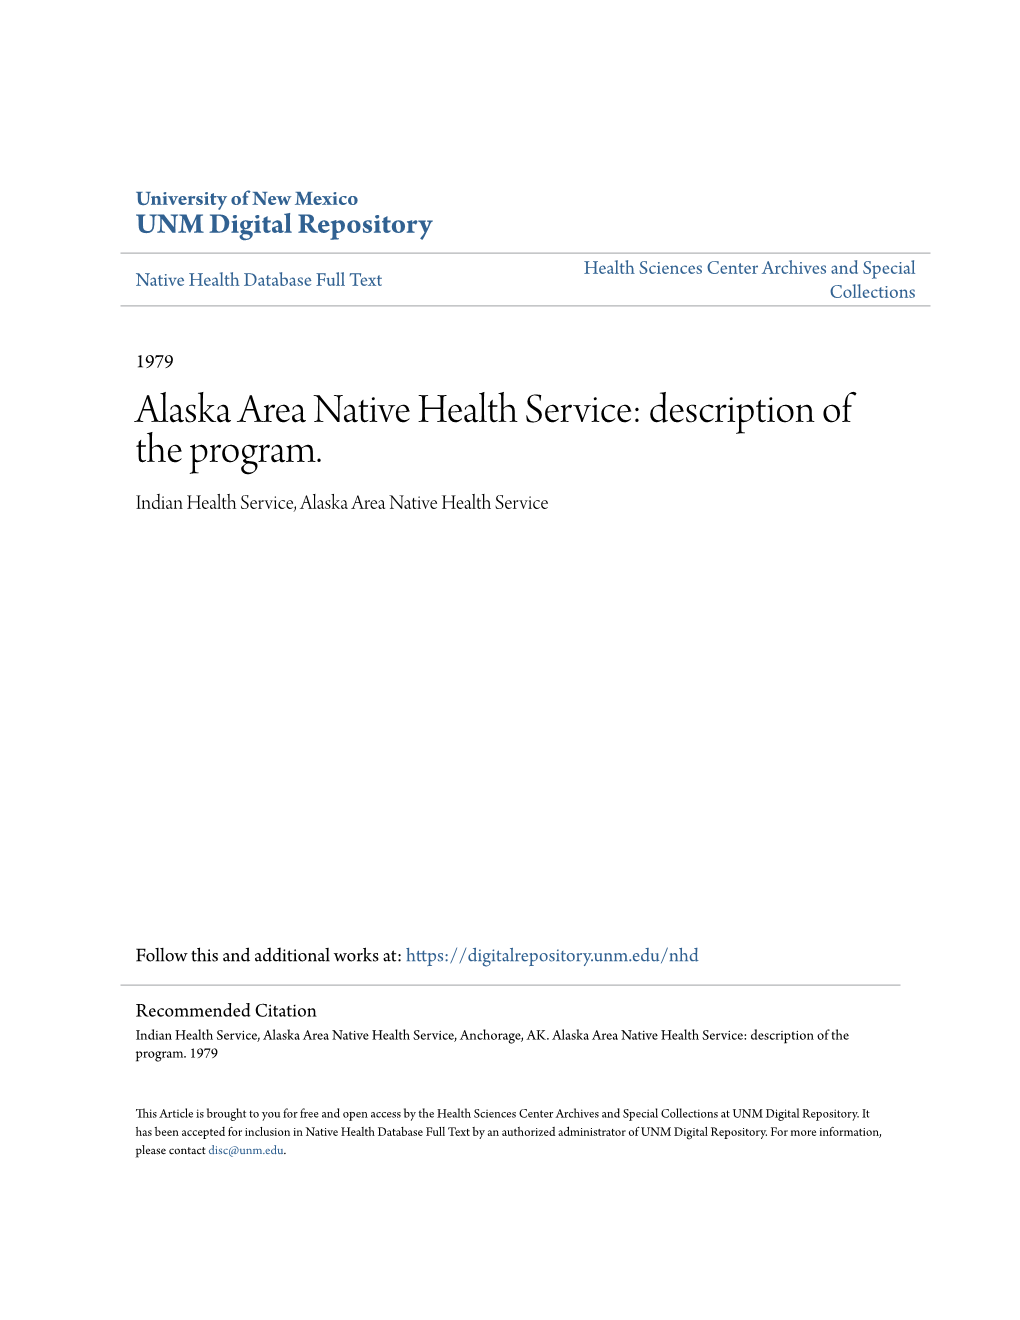 Alaska Area Native Health Service: Description of the Program